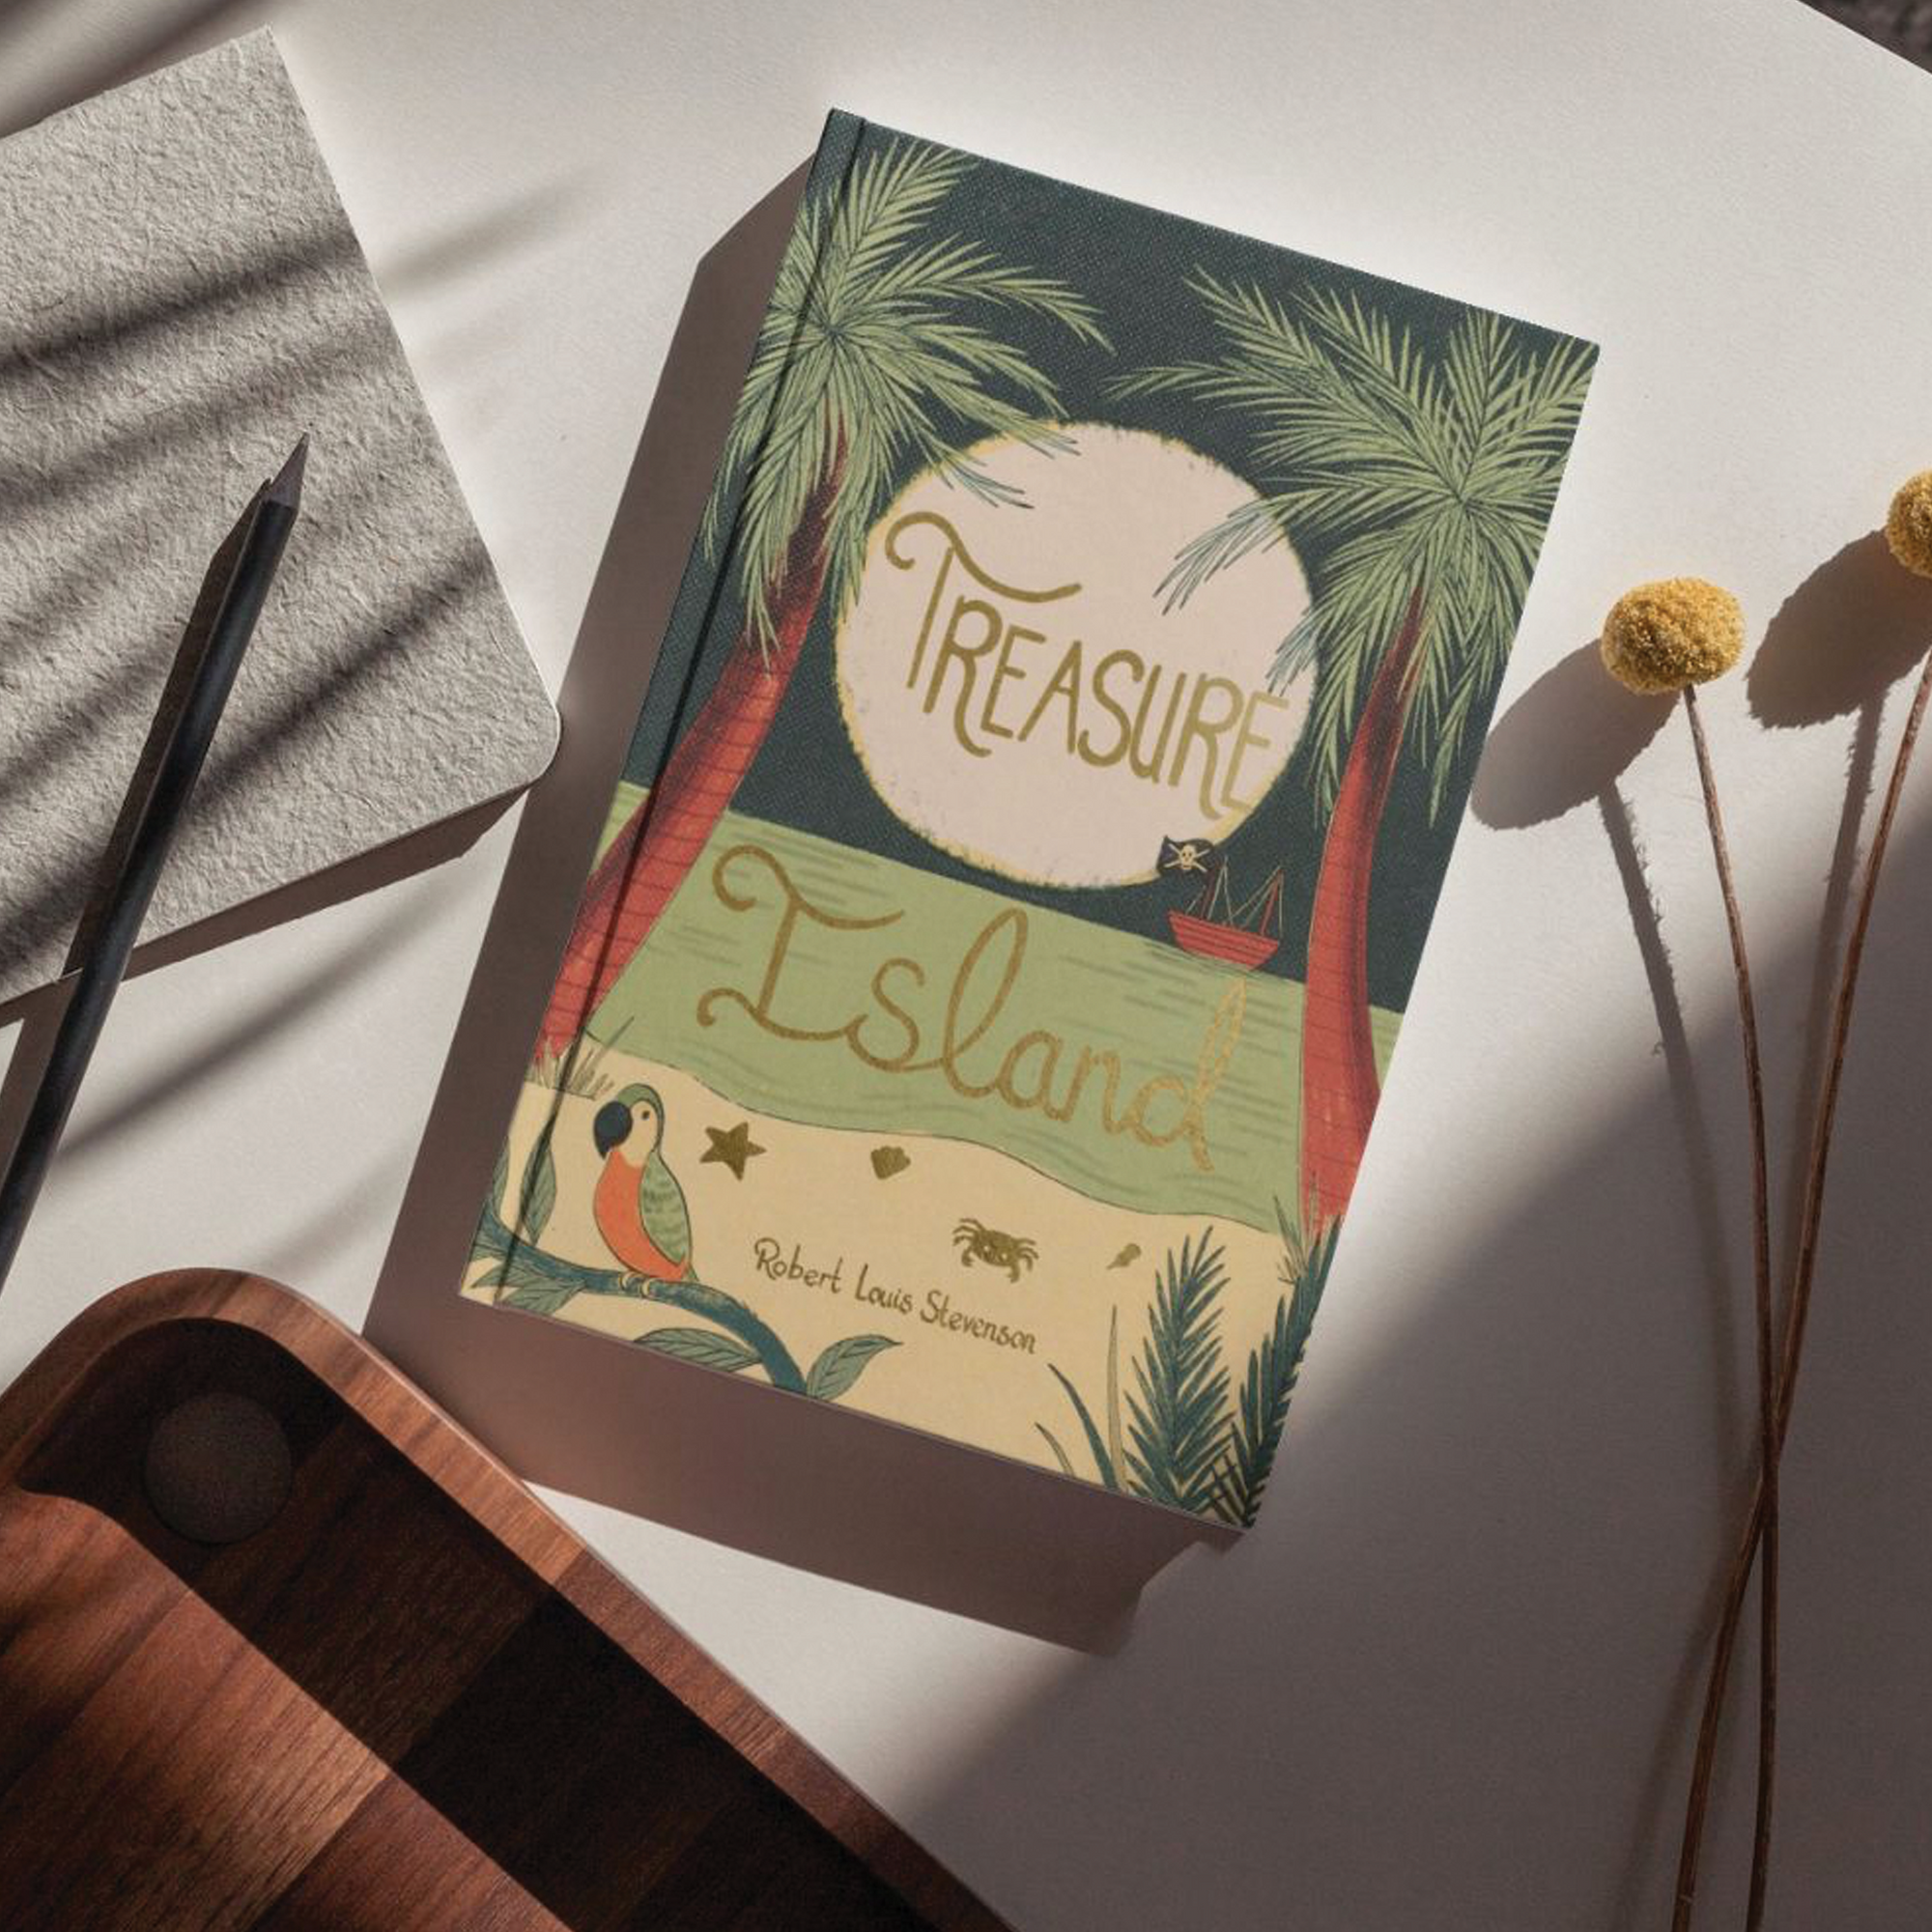 Treasure Island | Collector's Edition